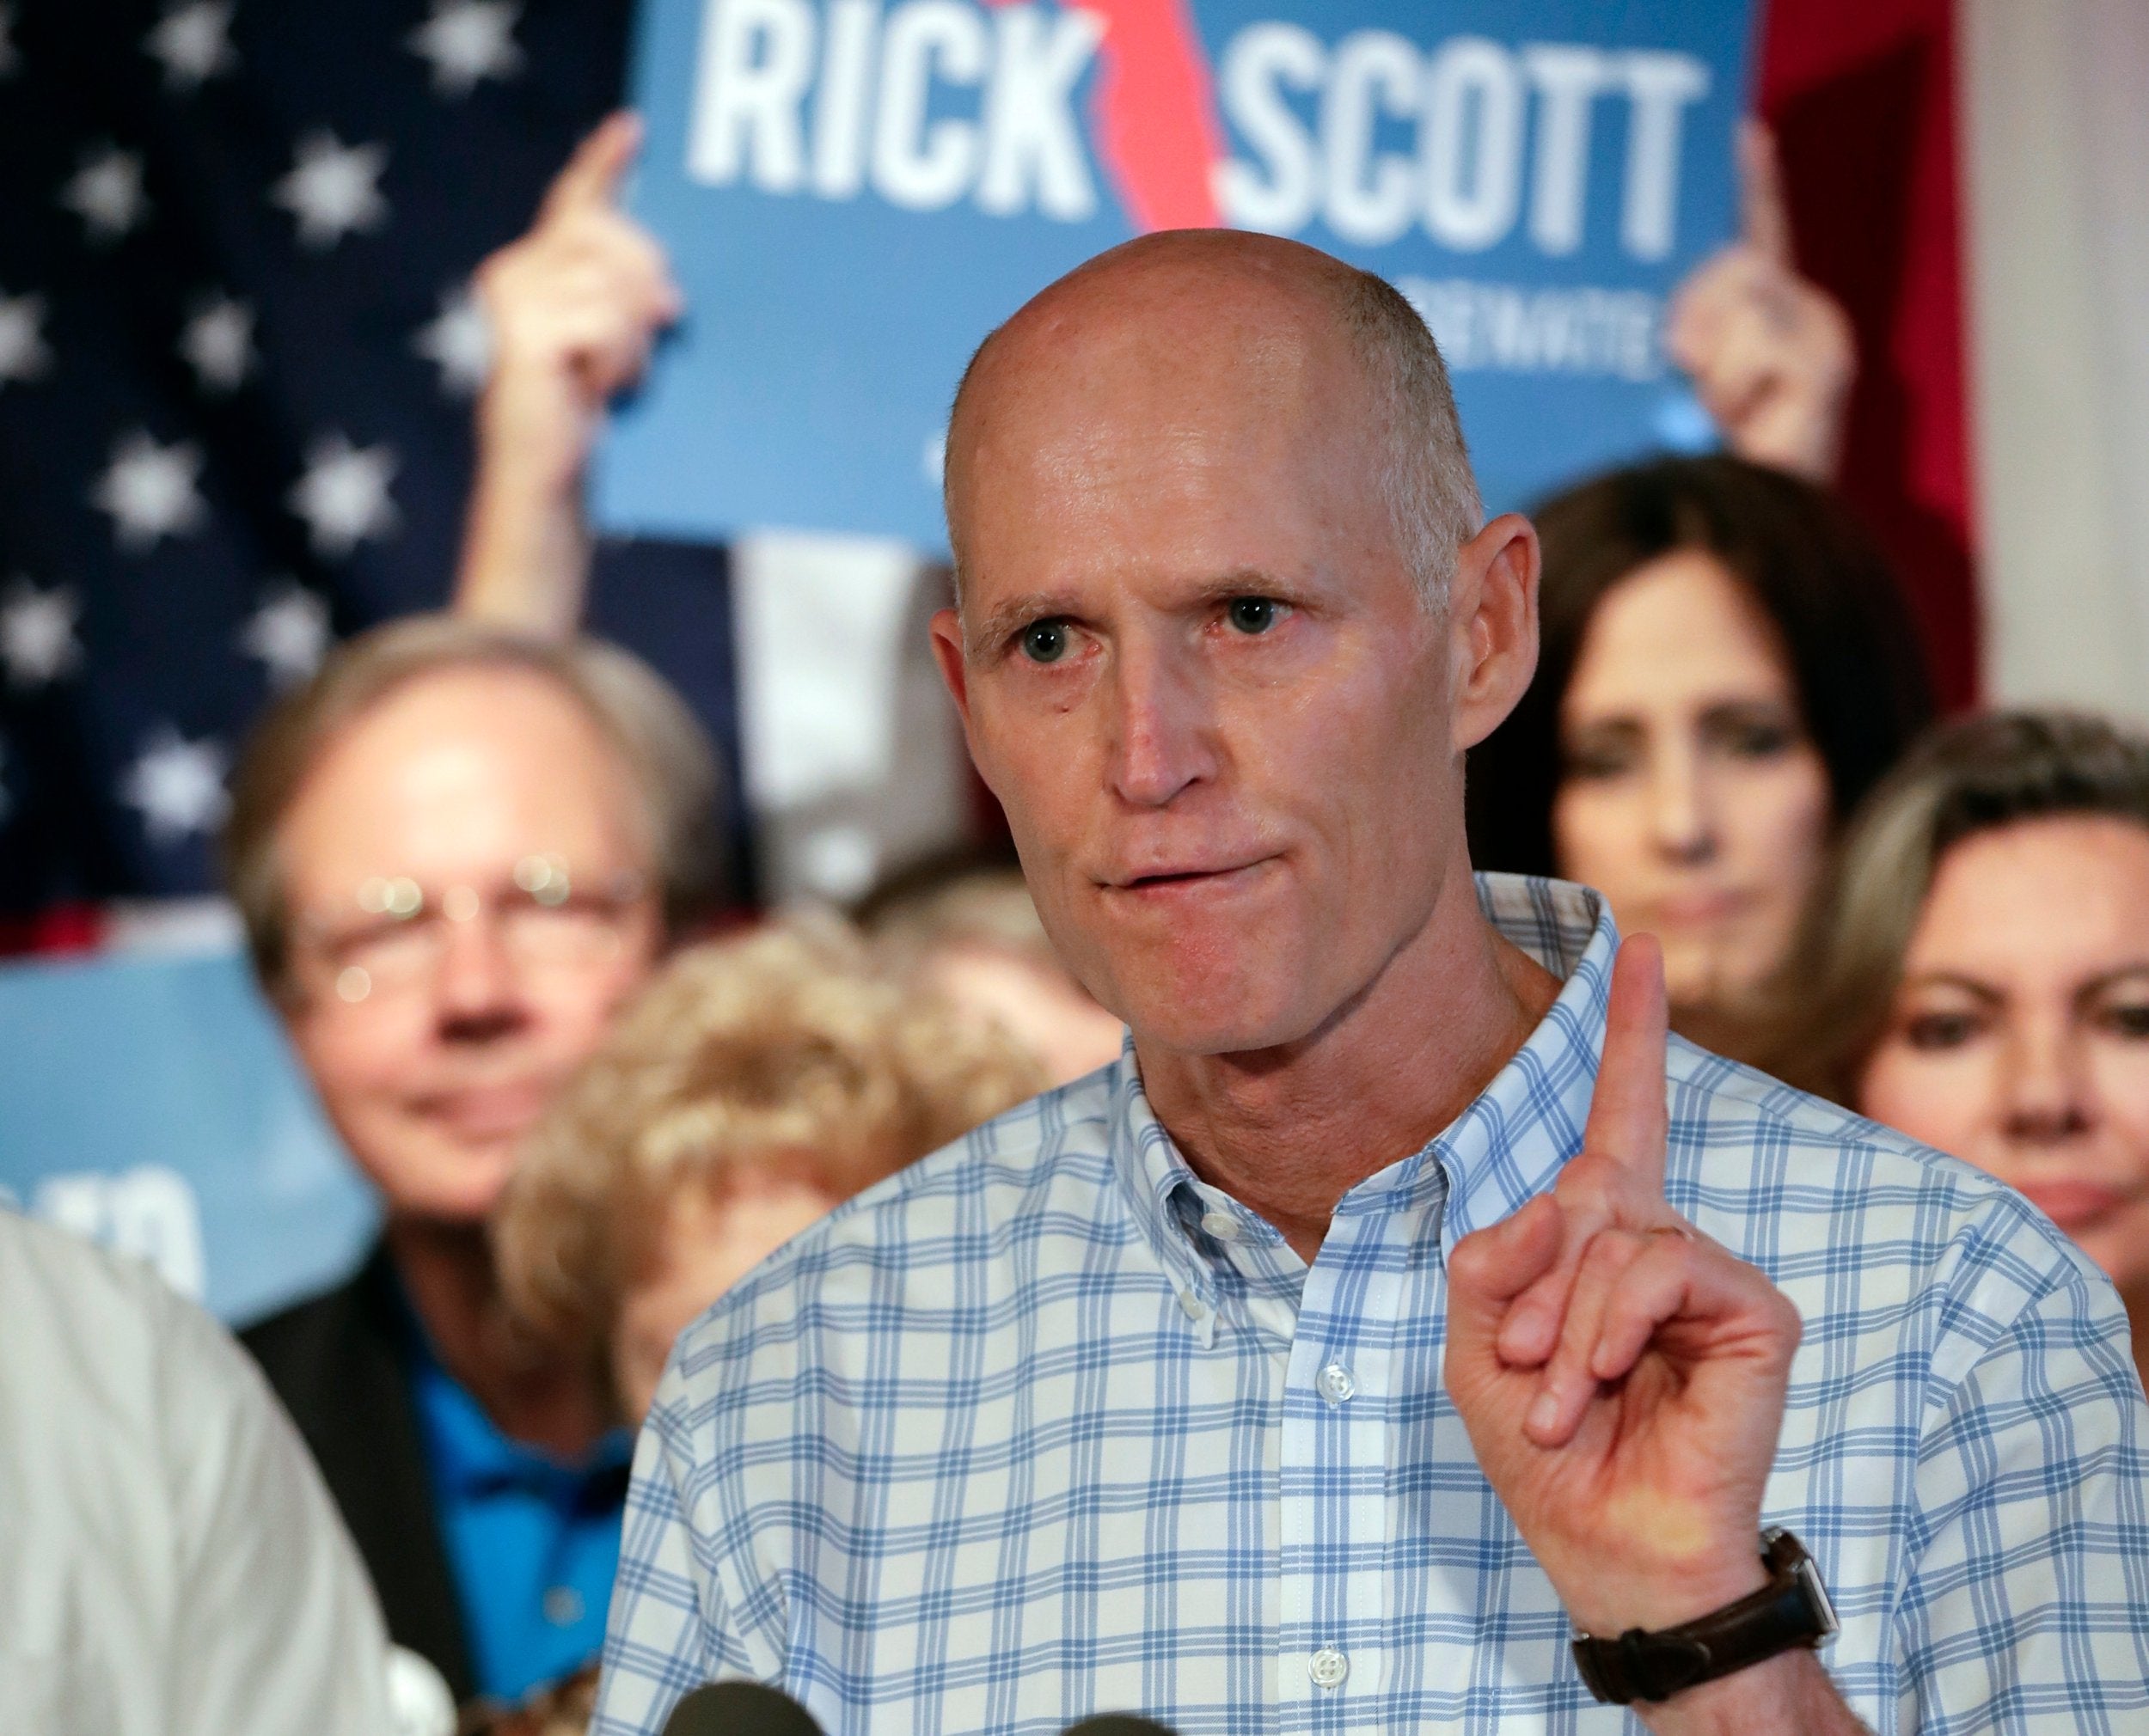 Mr Scott is running to become a US Senator representing Florida in Washington